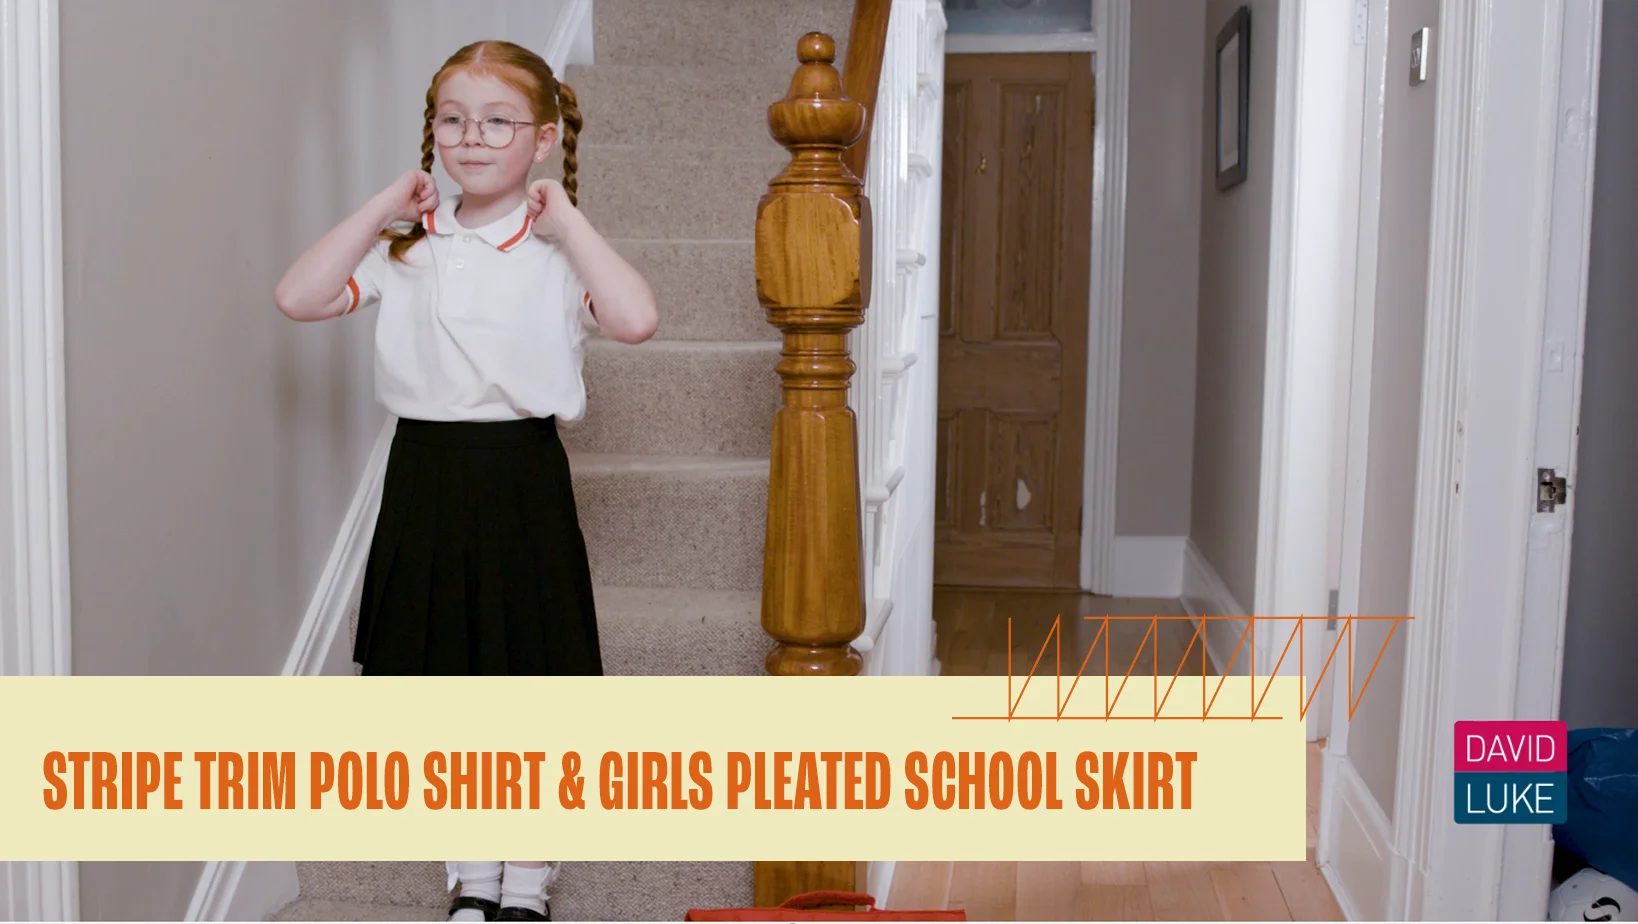 David Luke - Girls Pleated School Skirt on Vimeo